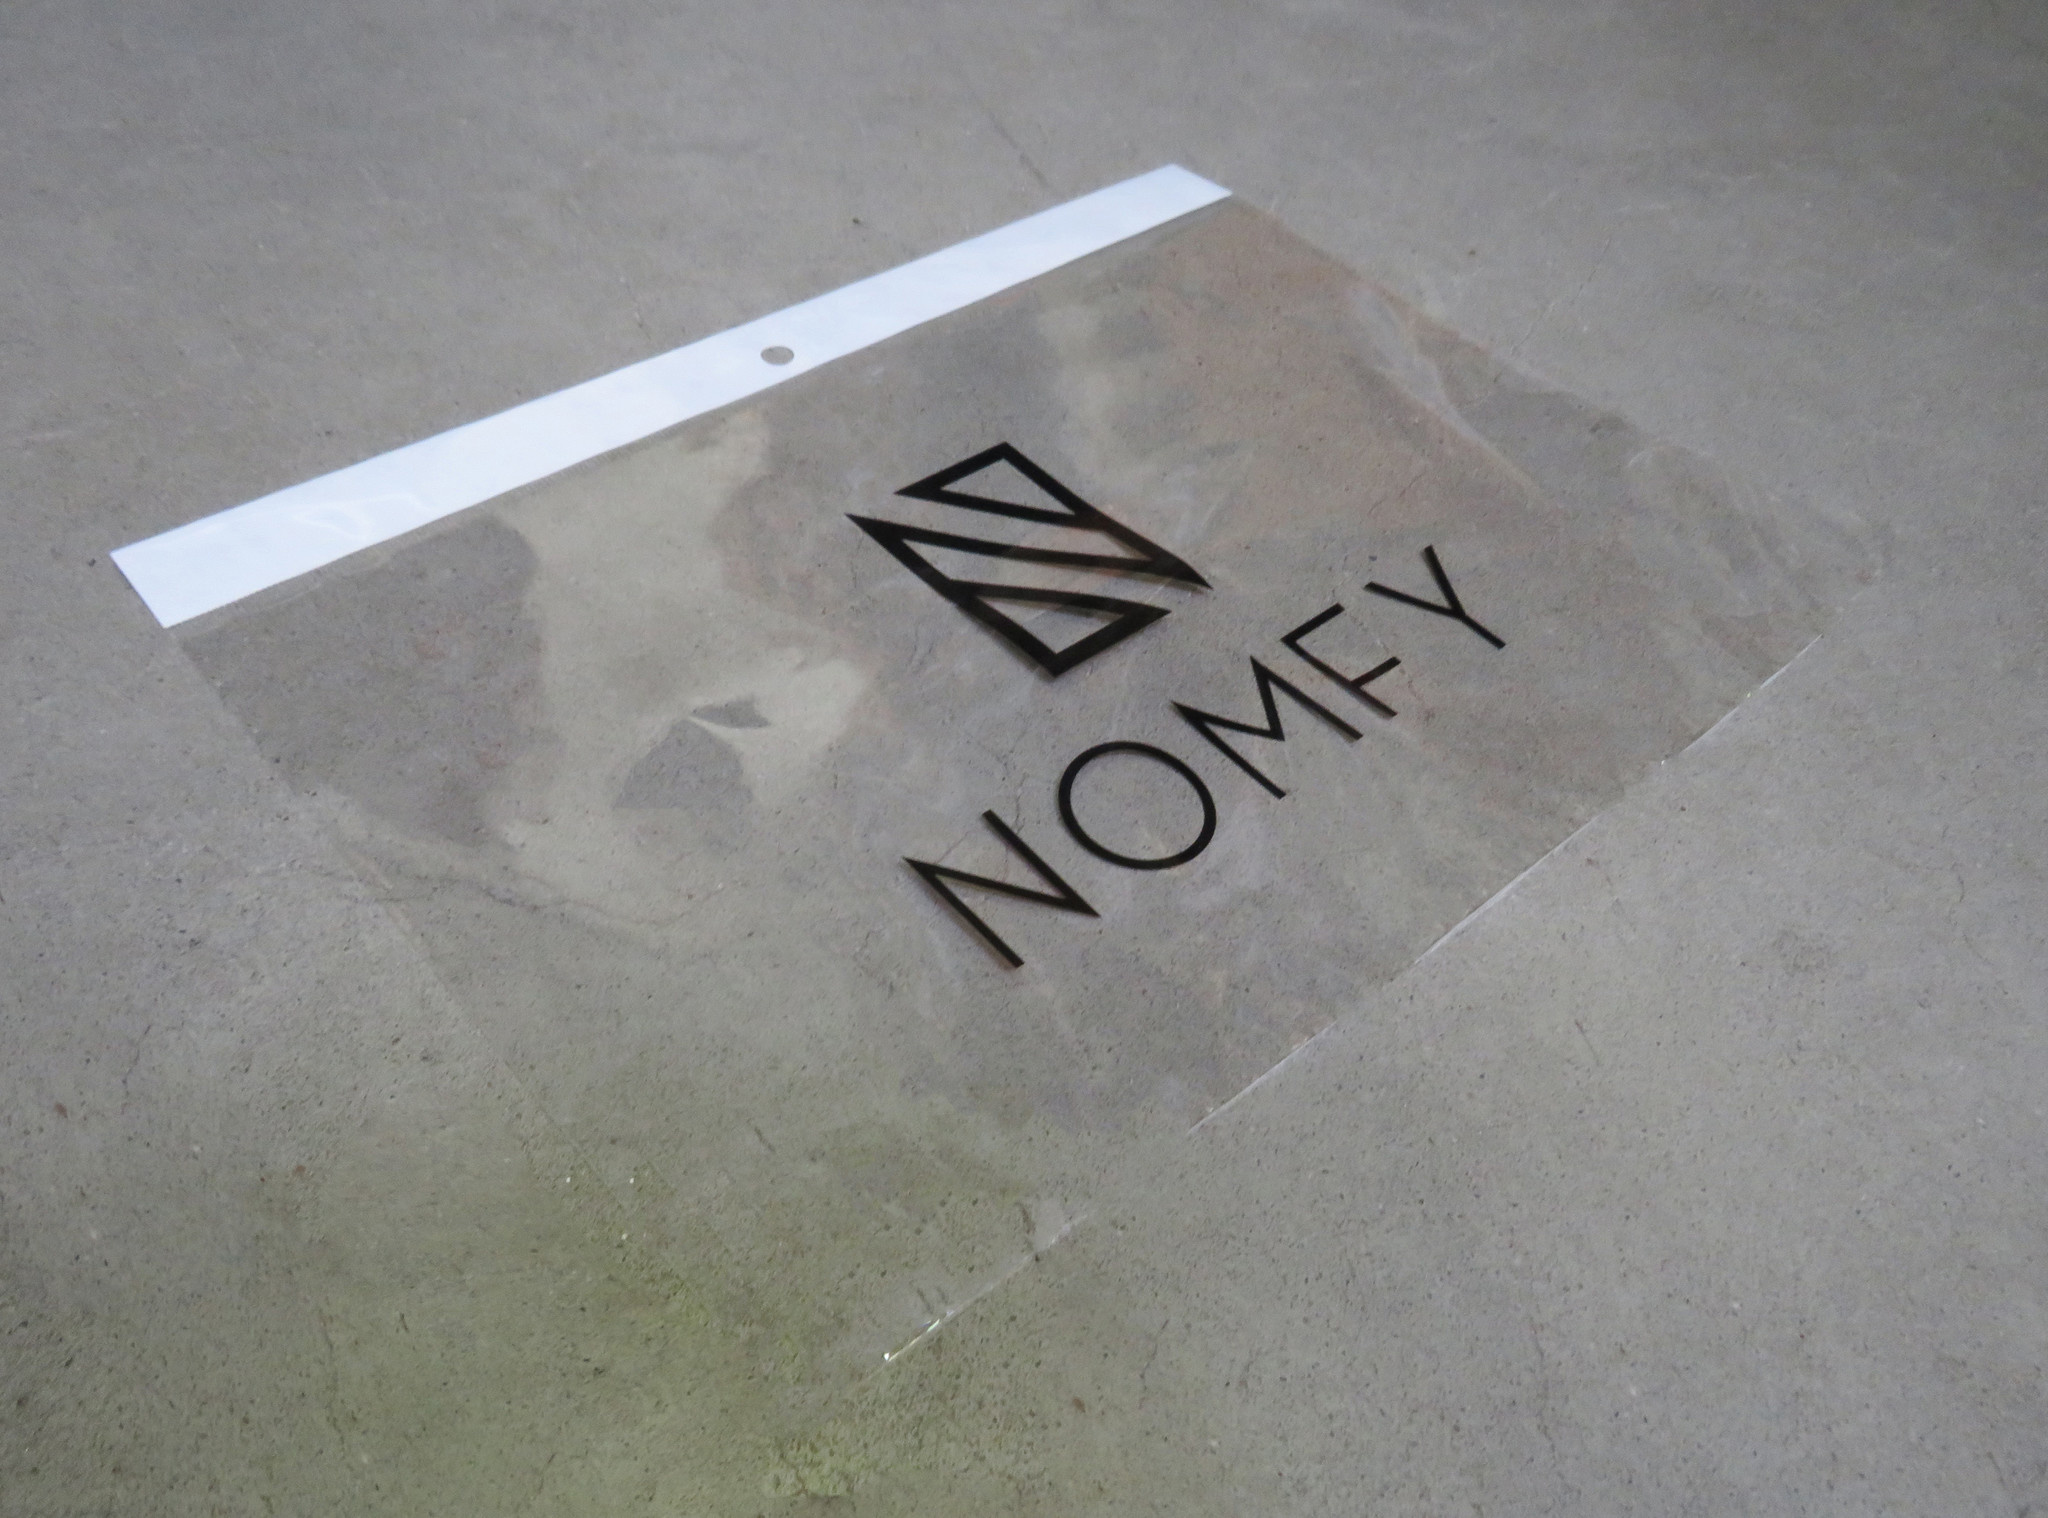 Nomfy Nomfy iPad Pro 11 inch (2022) Kinderhoes Met Screenprotector - Zwart